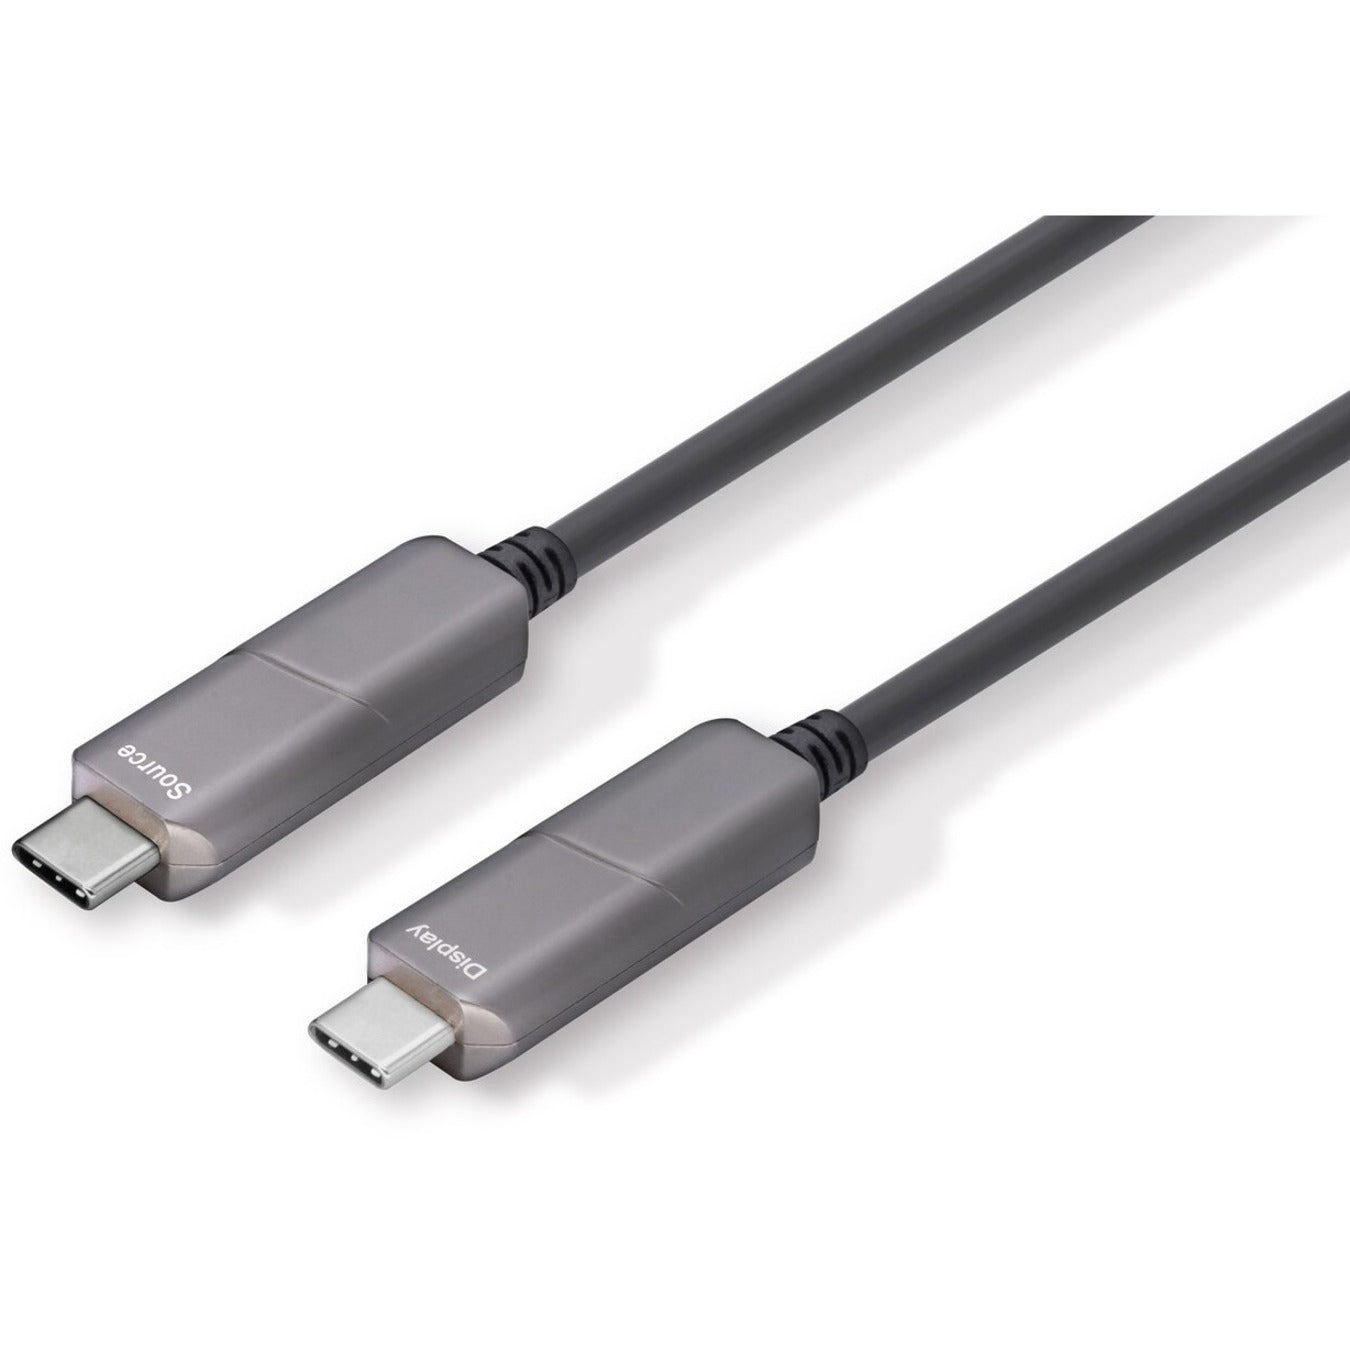 4XEM 4XUSBCFIBER50M 50M Fiber USB Type-C Cable, 4K@60HZ 21.6 Gbps, Plug & Play